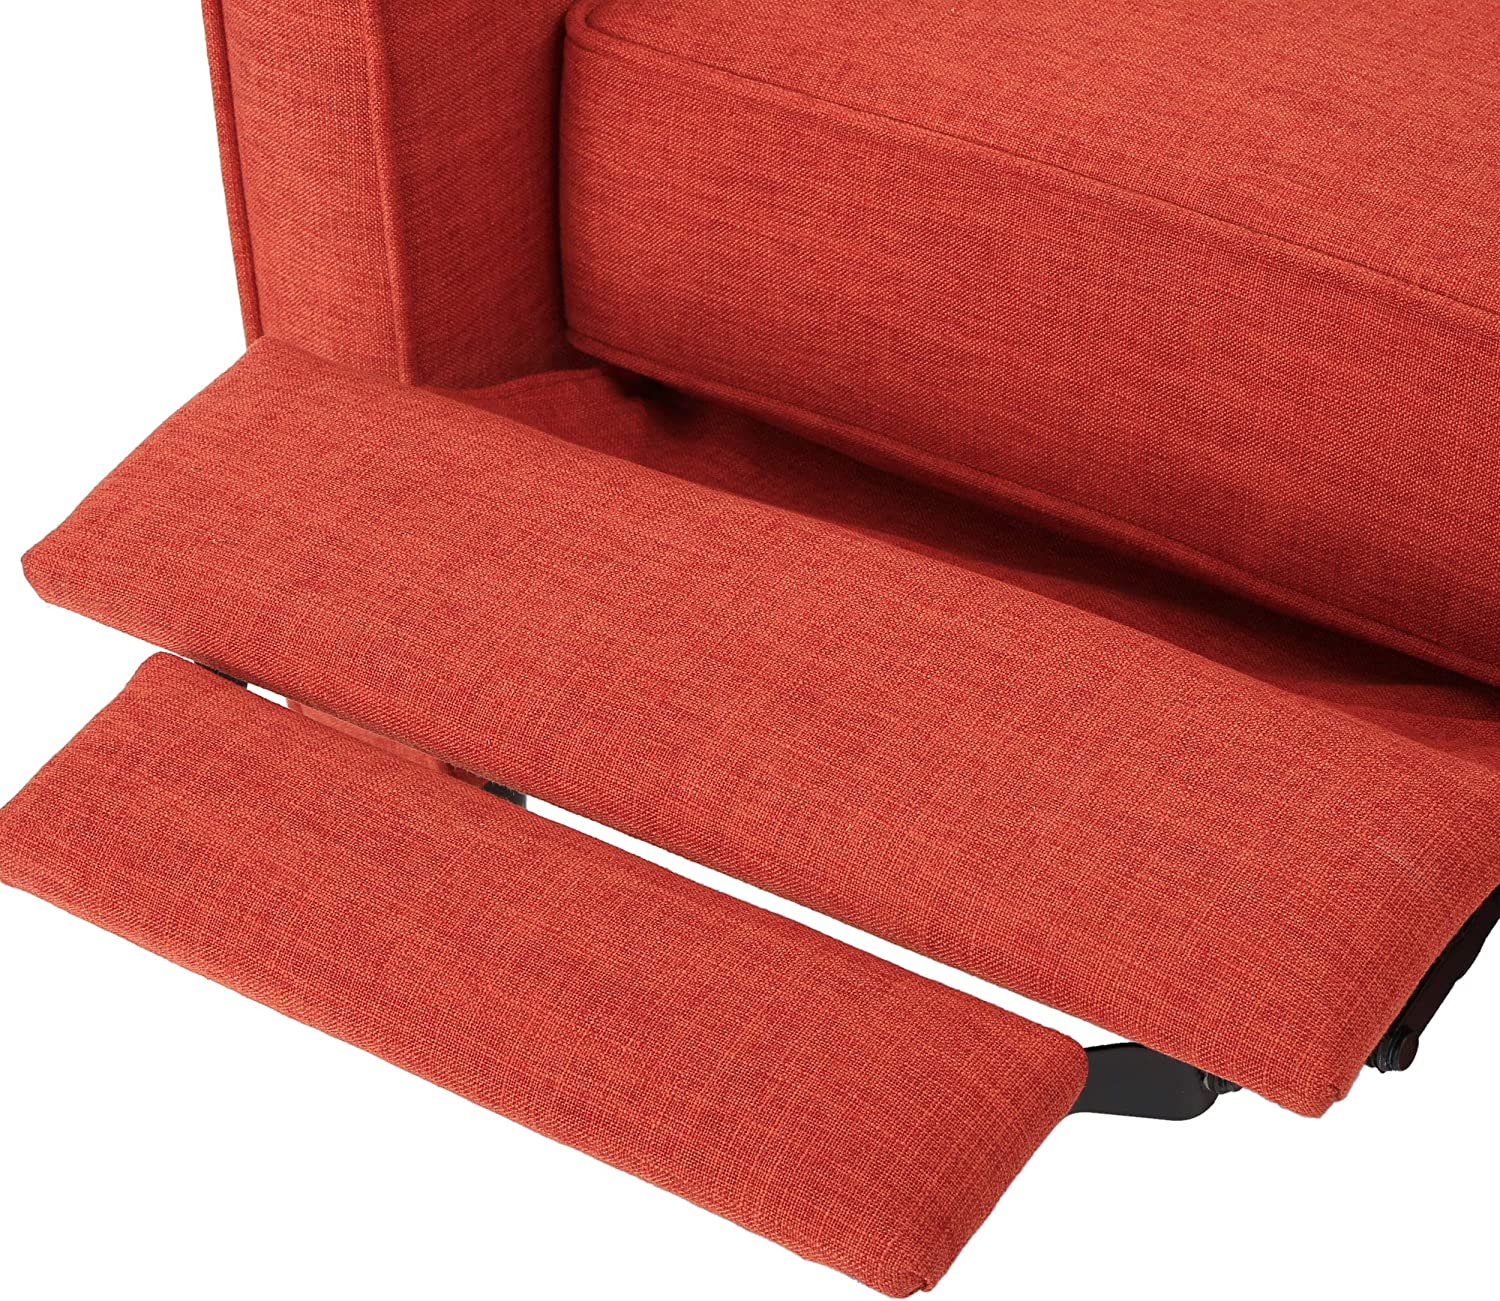 GDFStudio Macedonia Mid Century Modern Tufted Back Fabric Recliner (Muted Orange) - $150